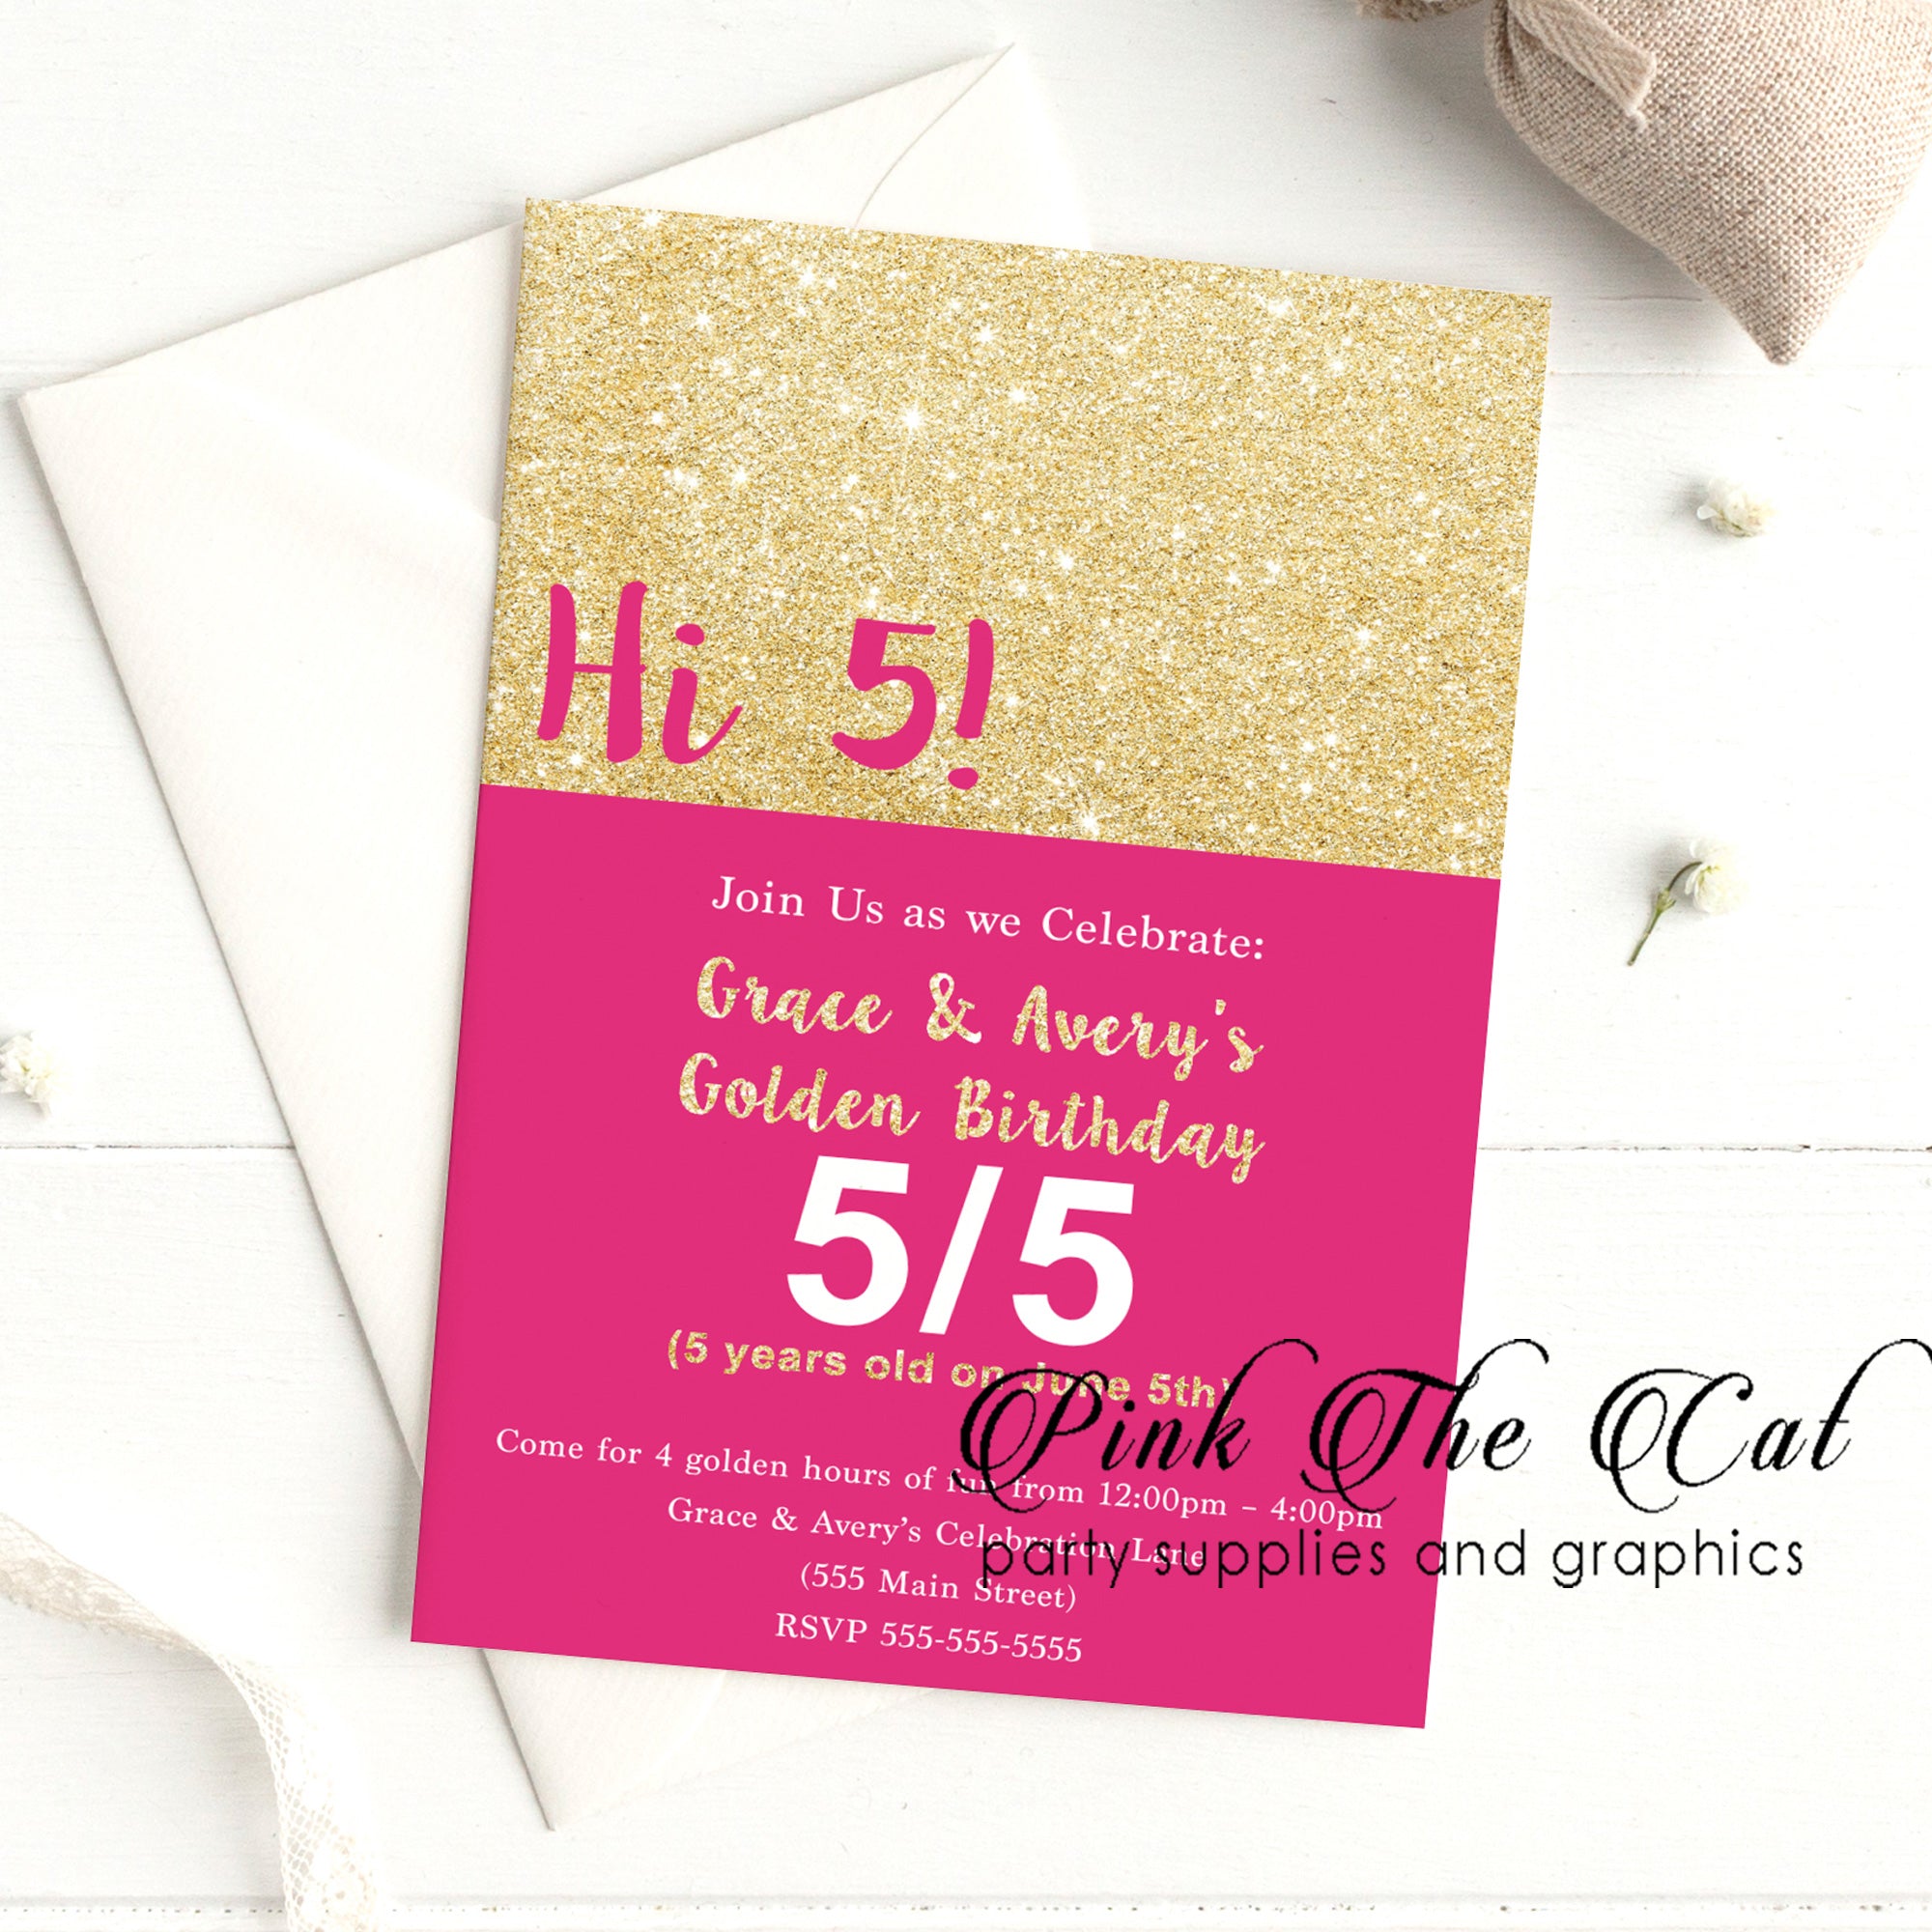 Hi 5 invitations girl 5th birthday pink gold glitter (set of 30)